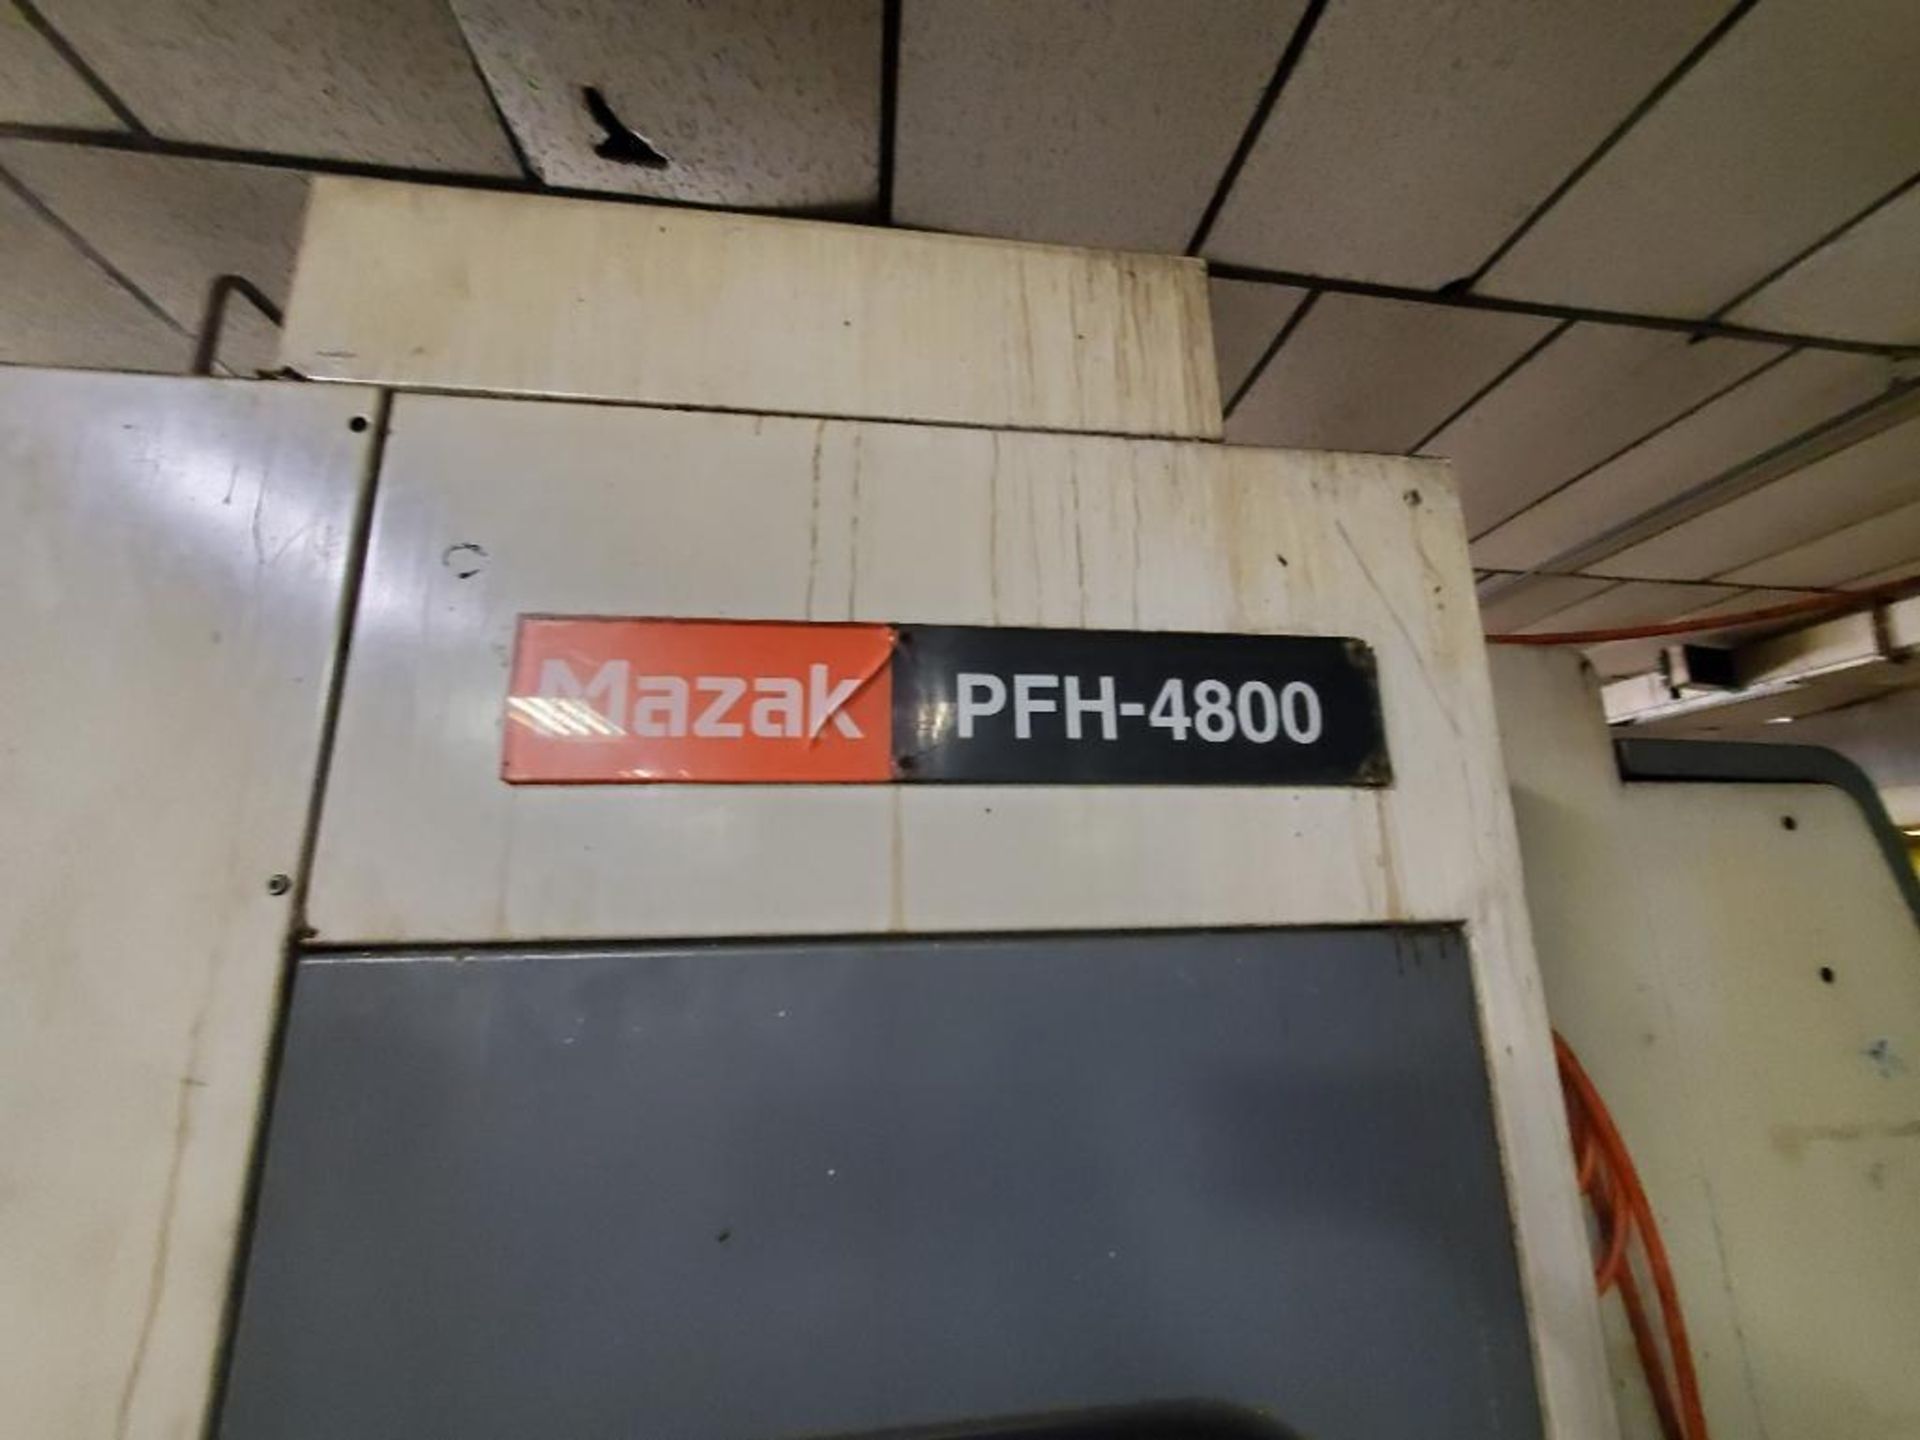 Mazak Machining center. Model PFH-4800. Serial number 162398. Mfg Date 10/02. - Image 8 of 16